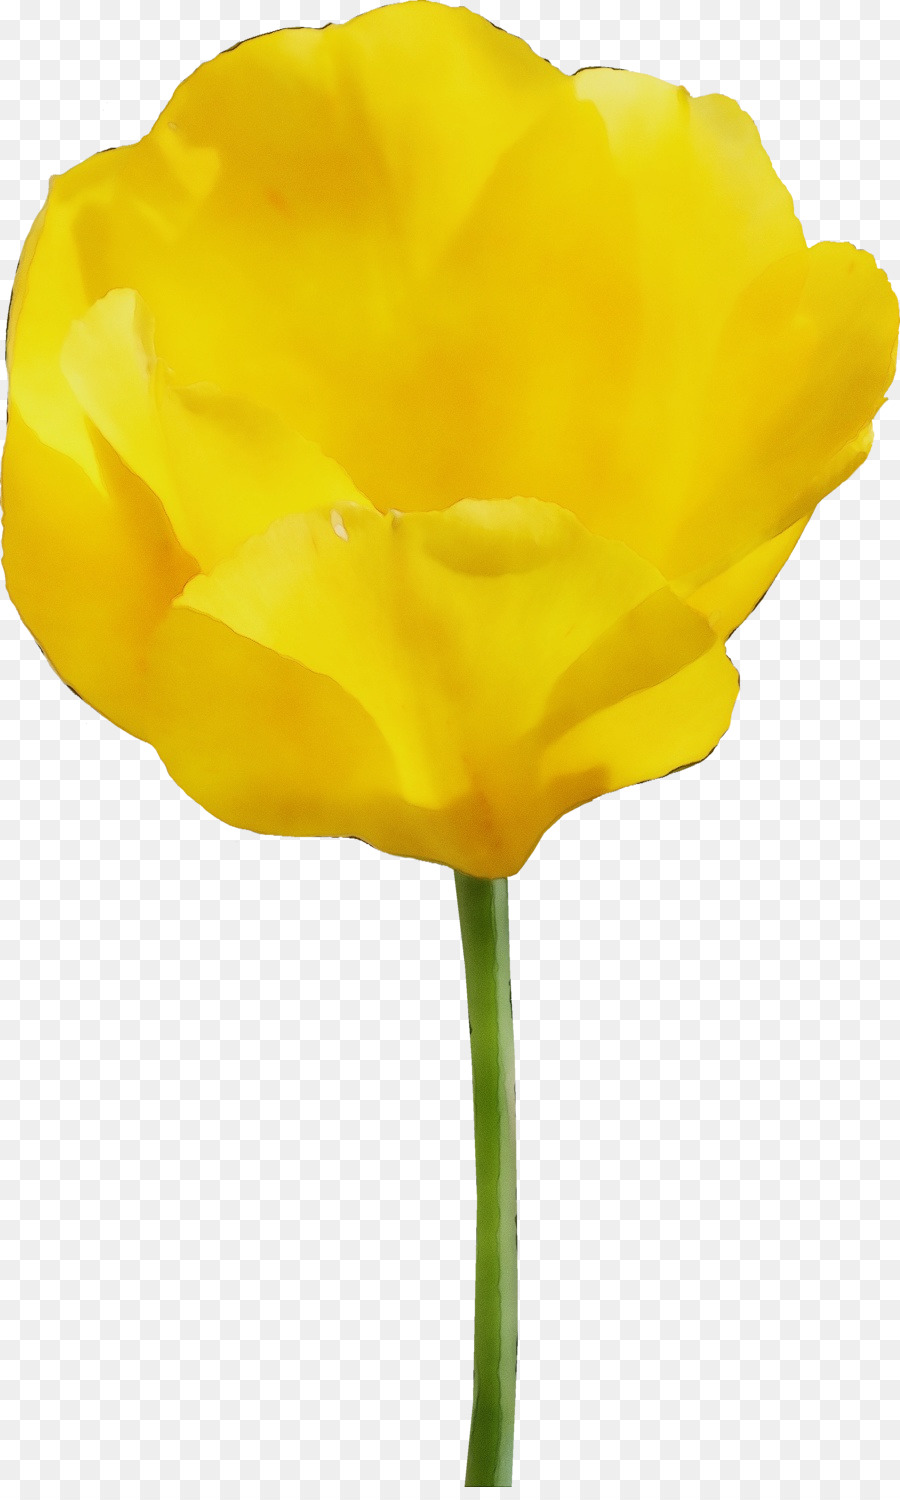 gelbe Blumenblumenblatt Betriebstulpe - 